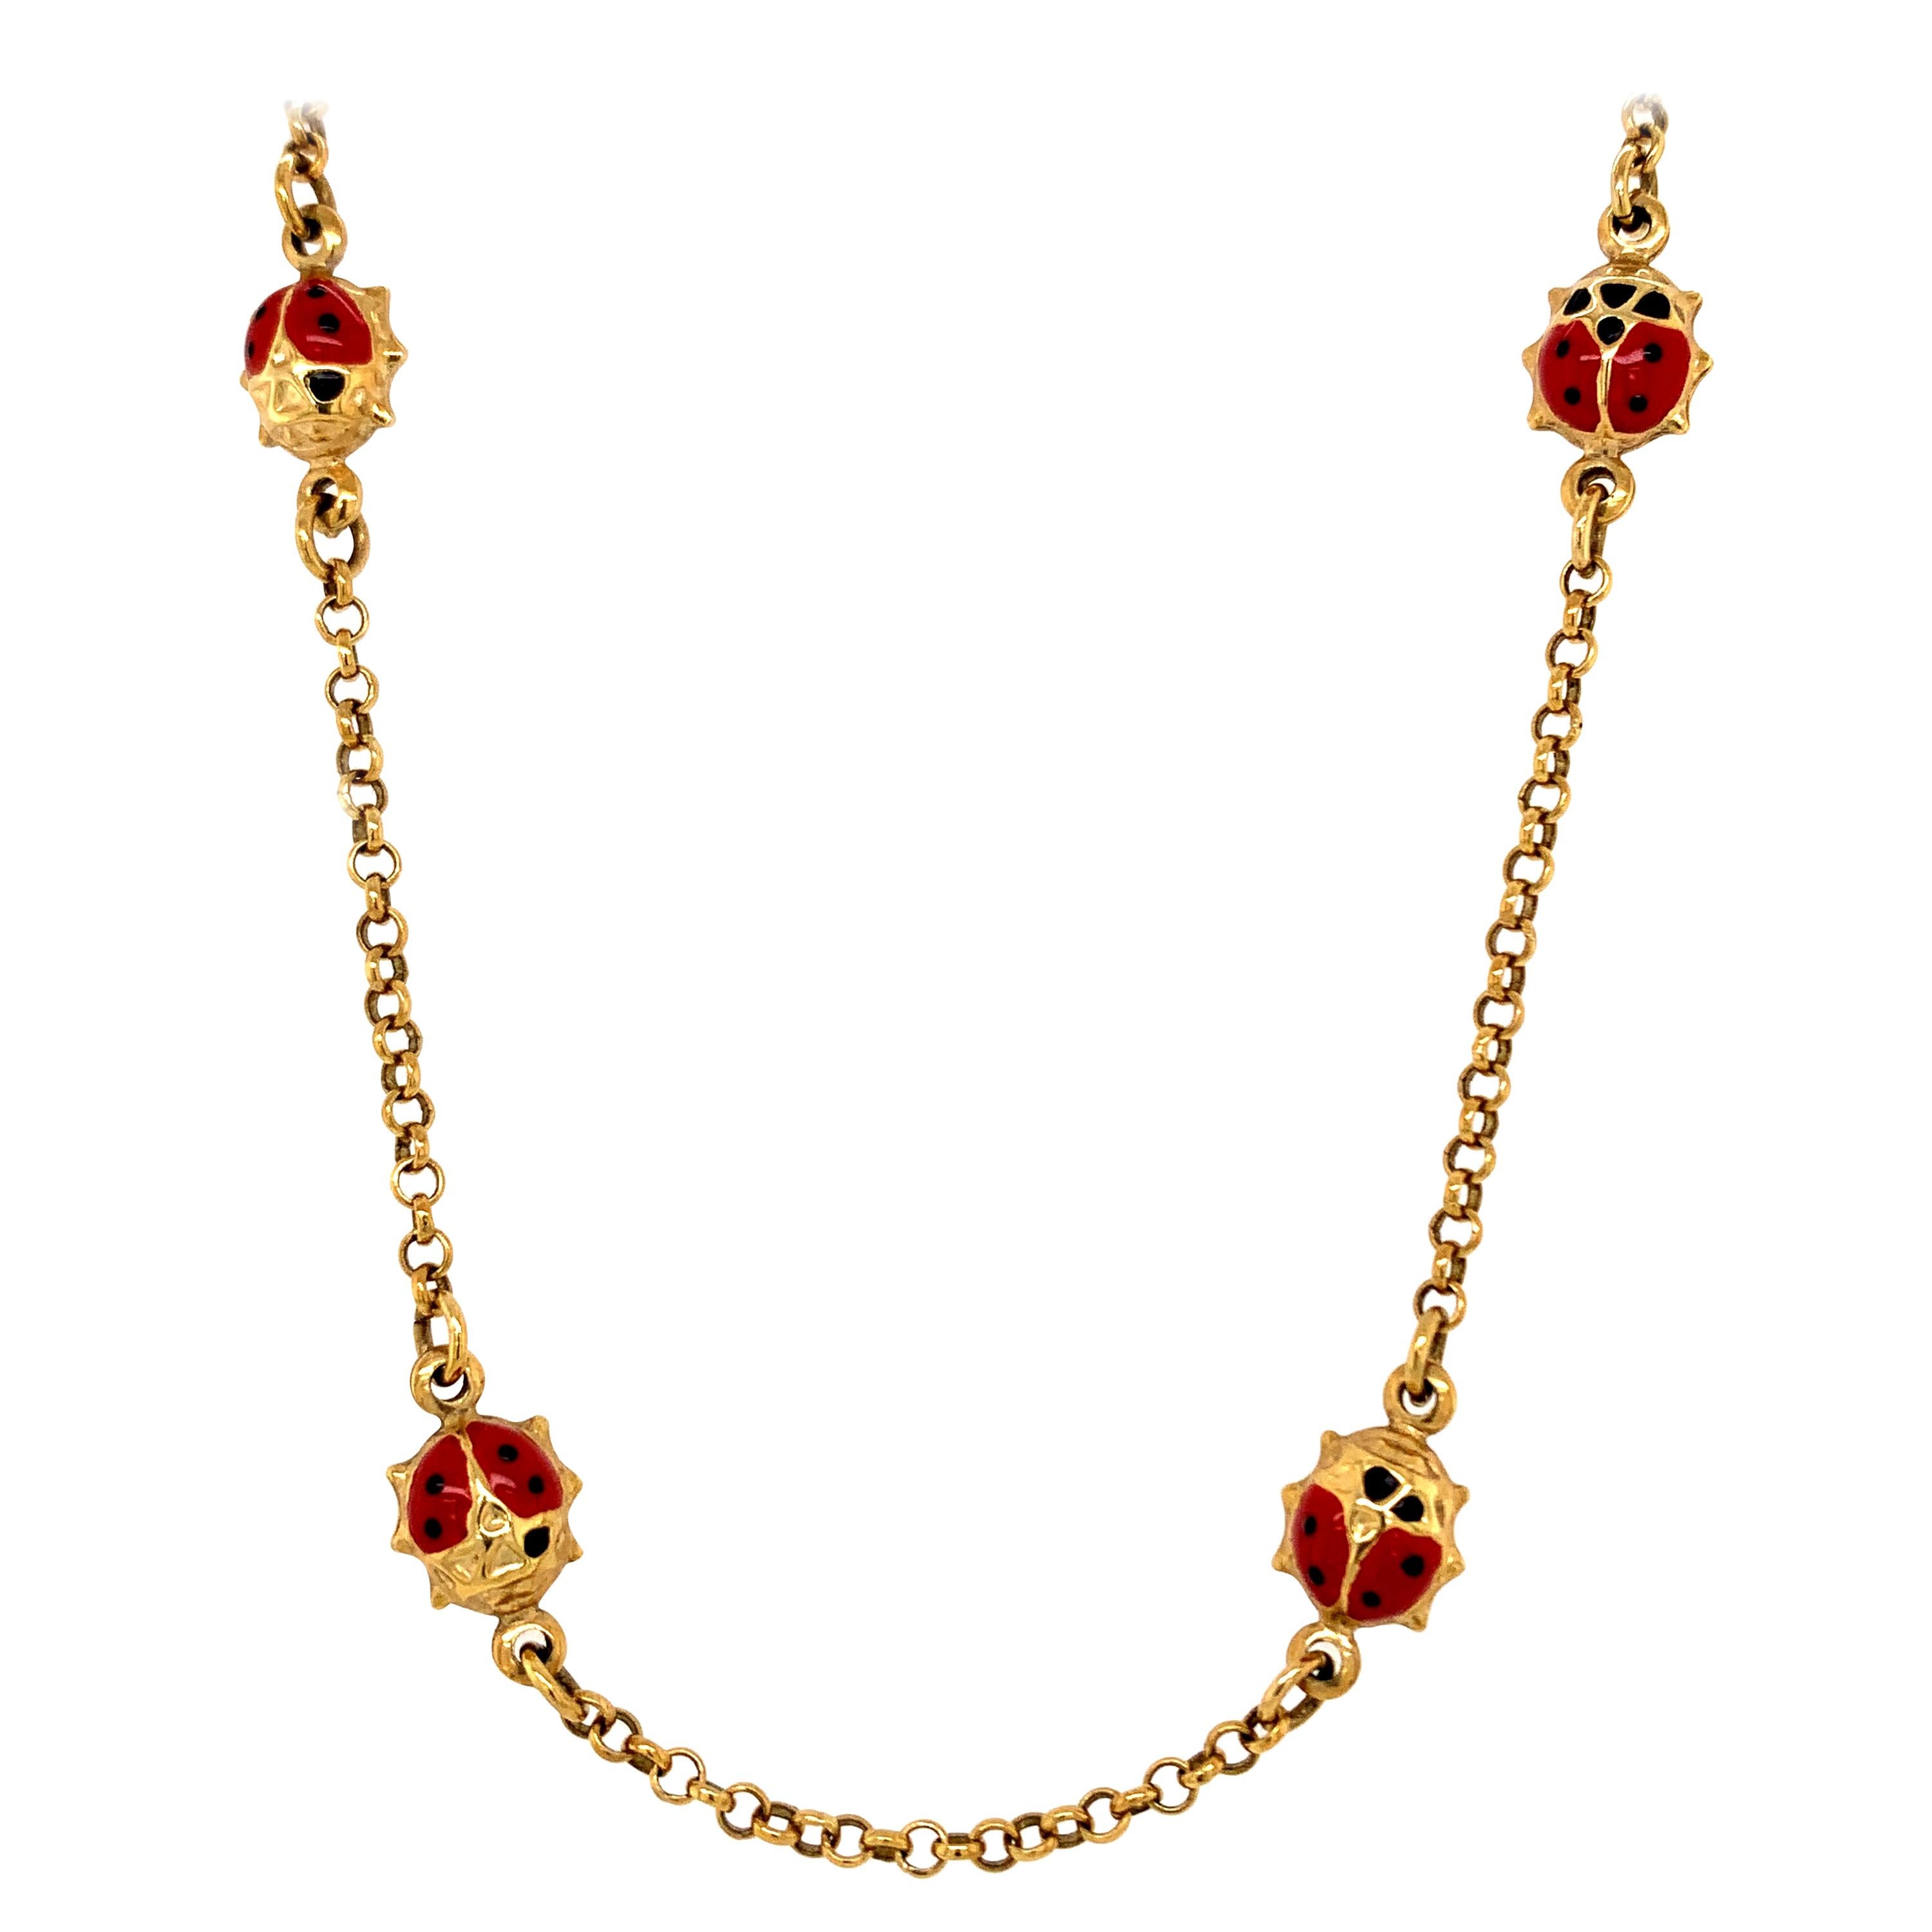 Gold and Enamel Lady Bug Necklace